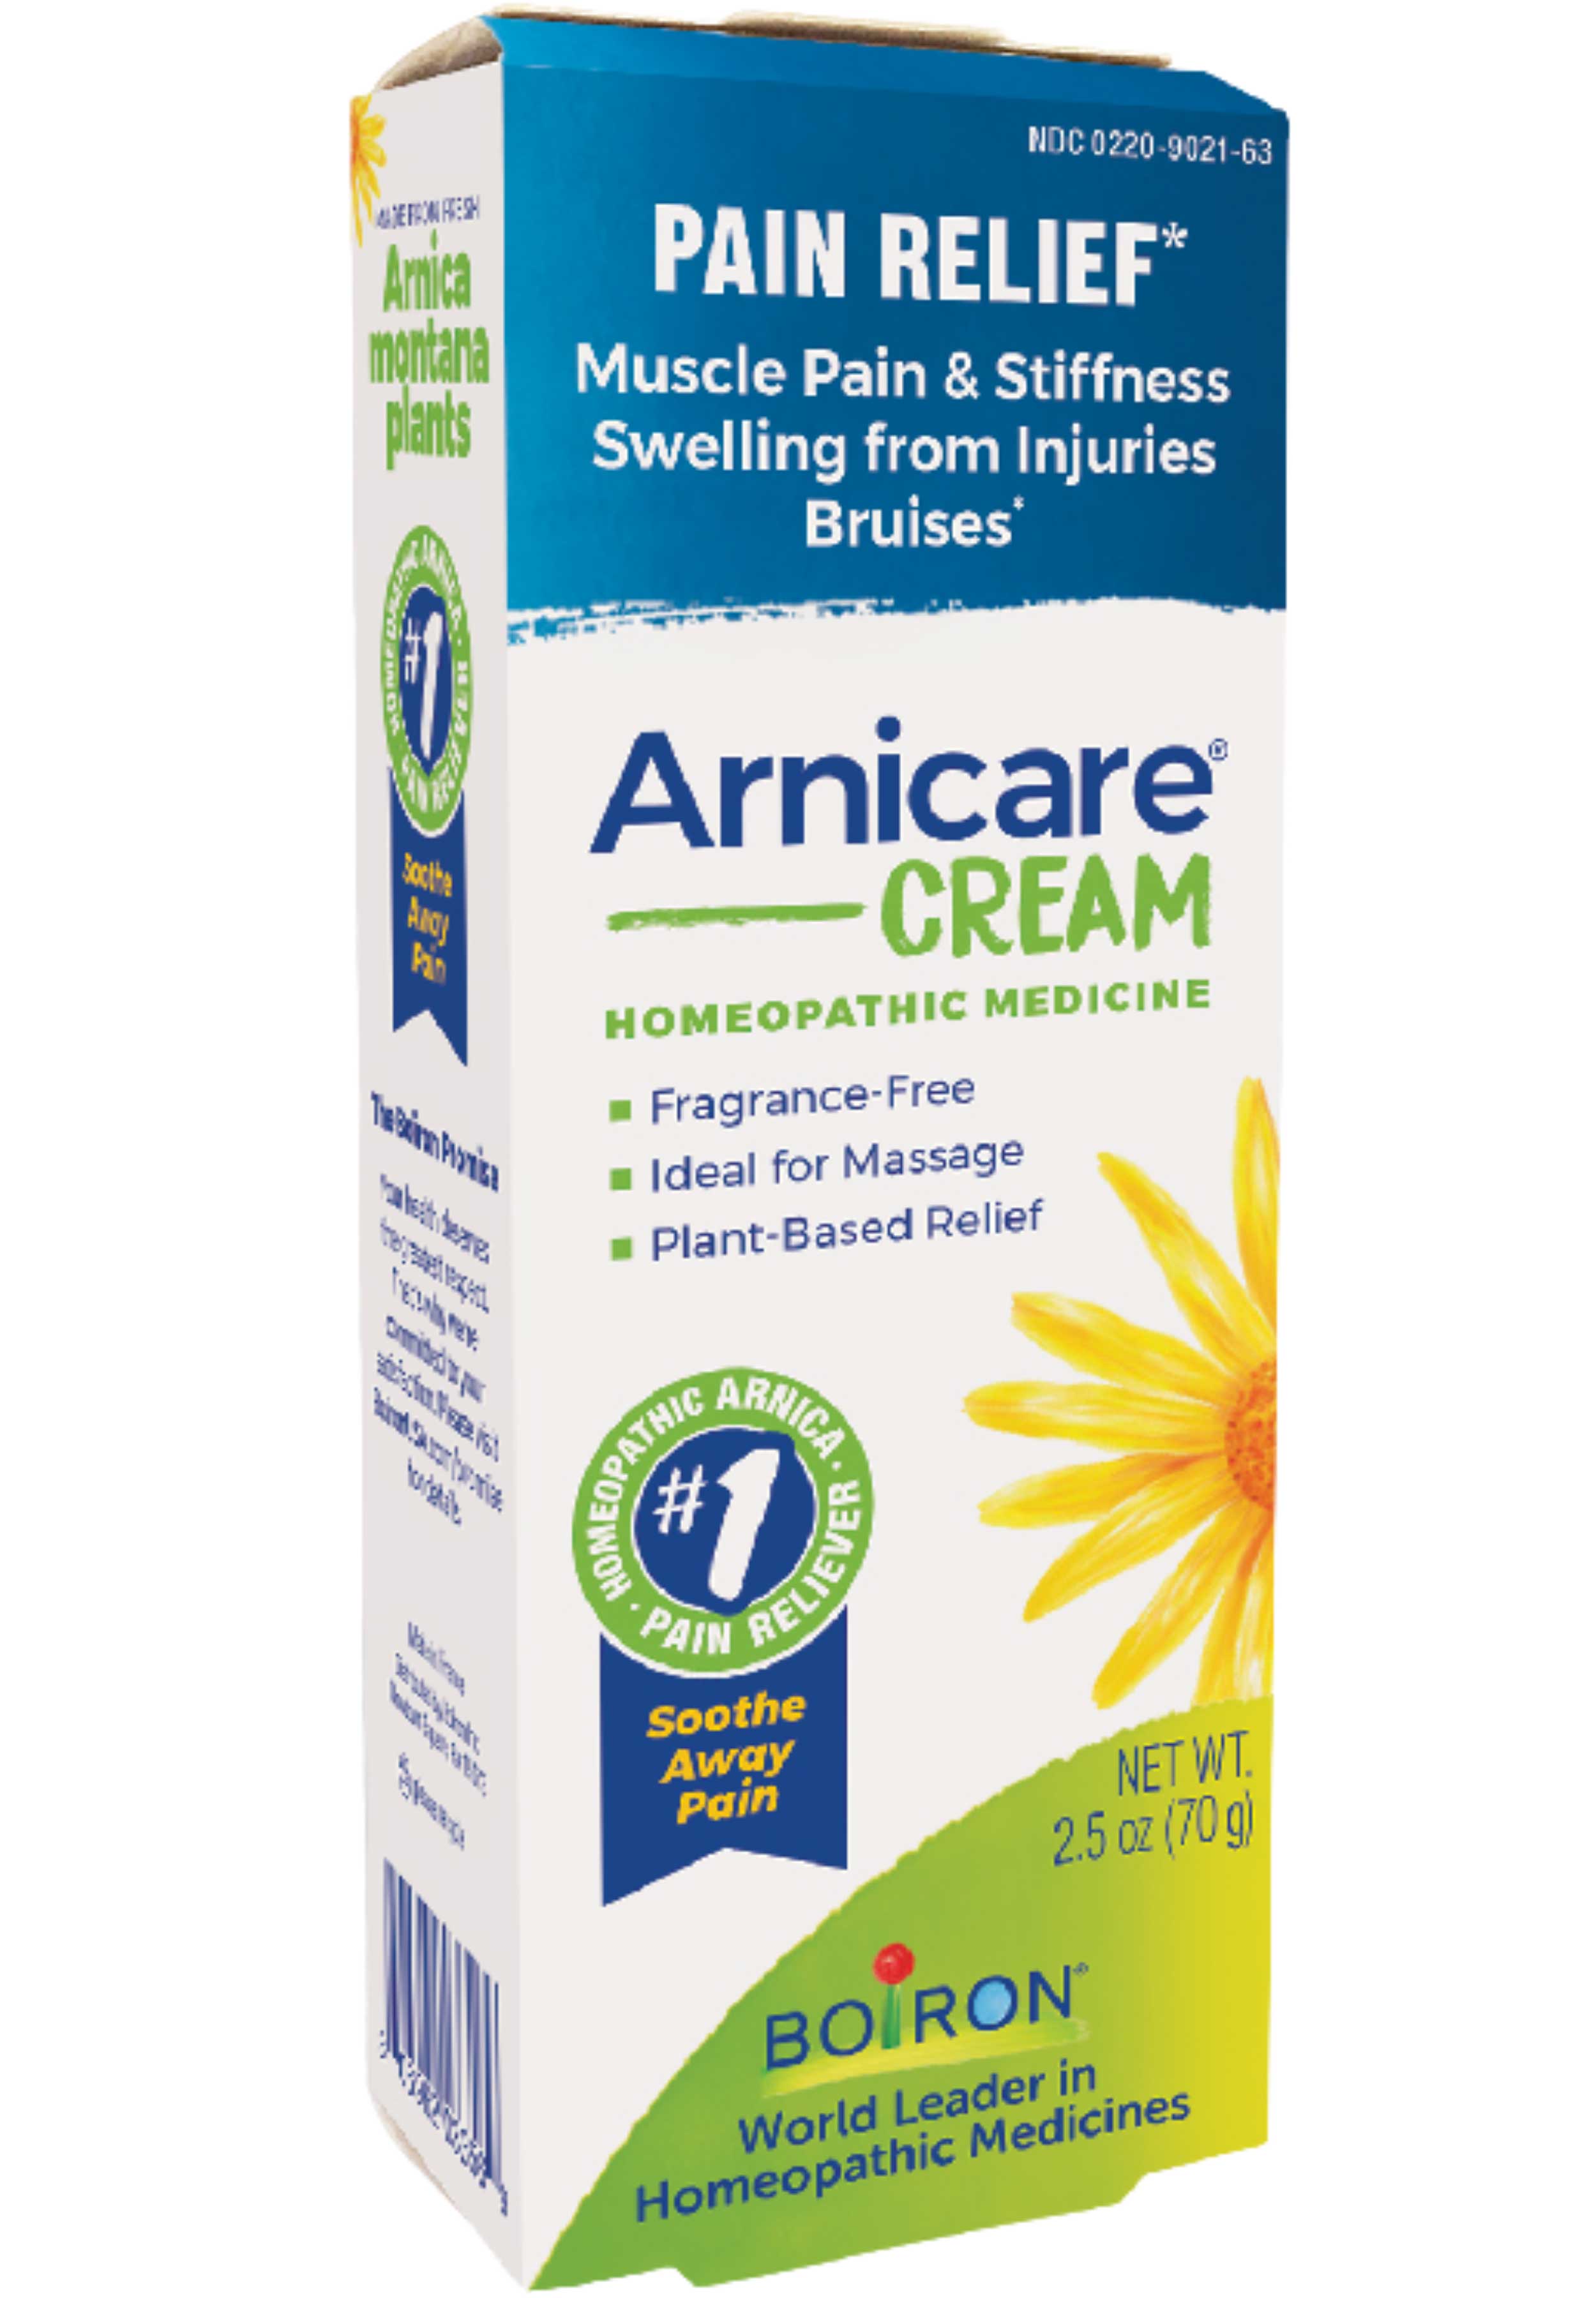 Boiron Homeopathics Arnicare cream